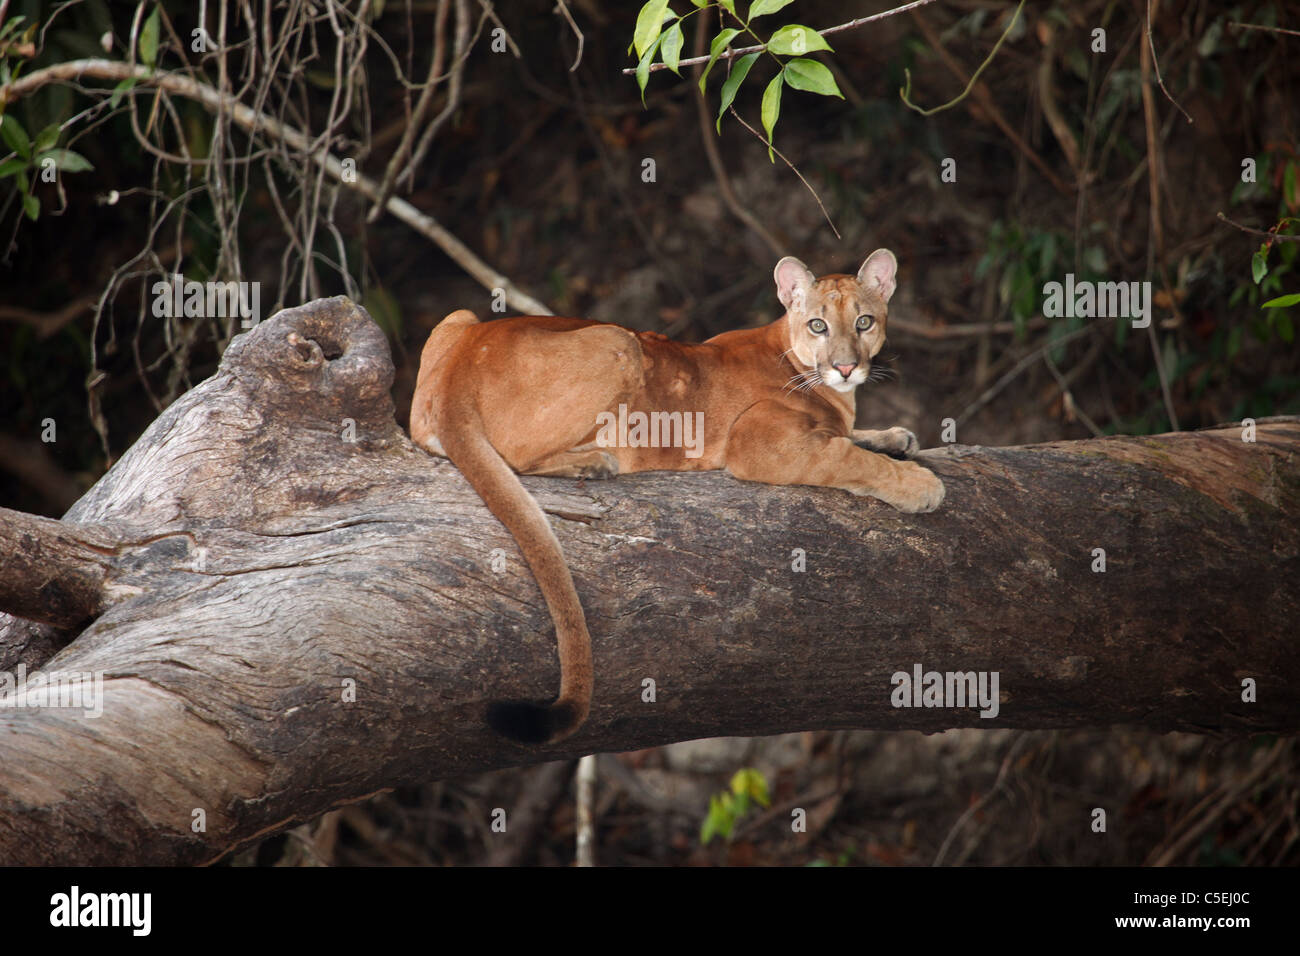 Puma, Felis concolor, Pantanal Brazil Stock Photo - Alamy